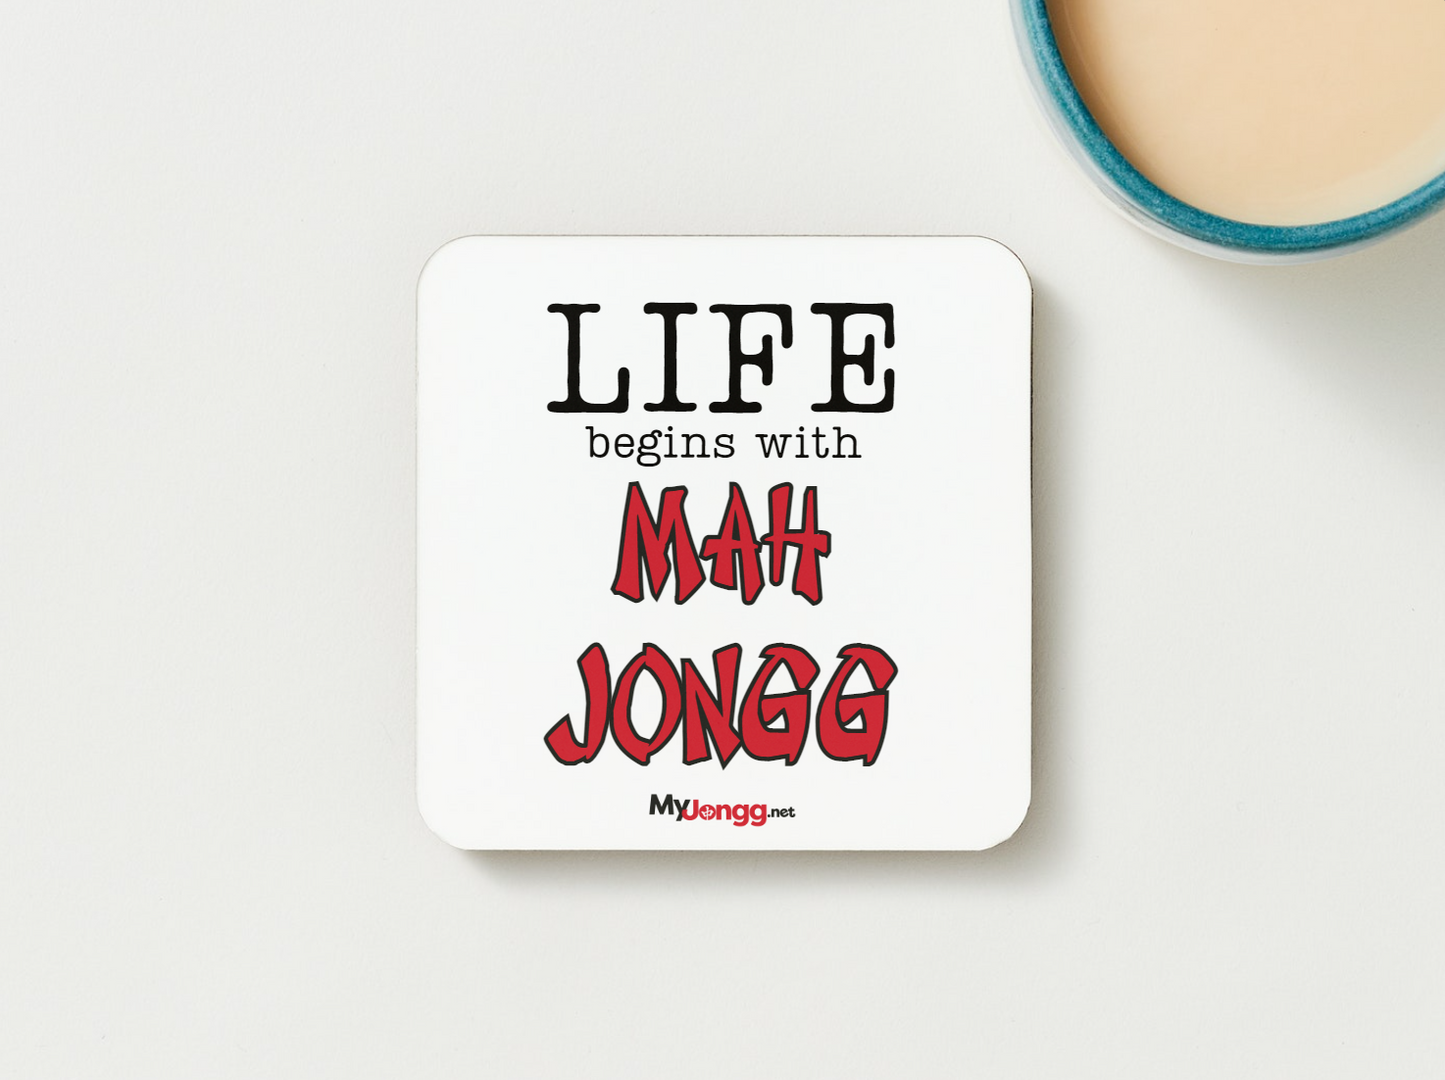 Square Hardboard Mah Jongg Coasters - Set #1